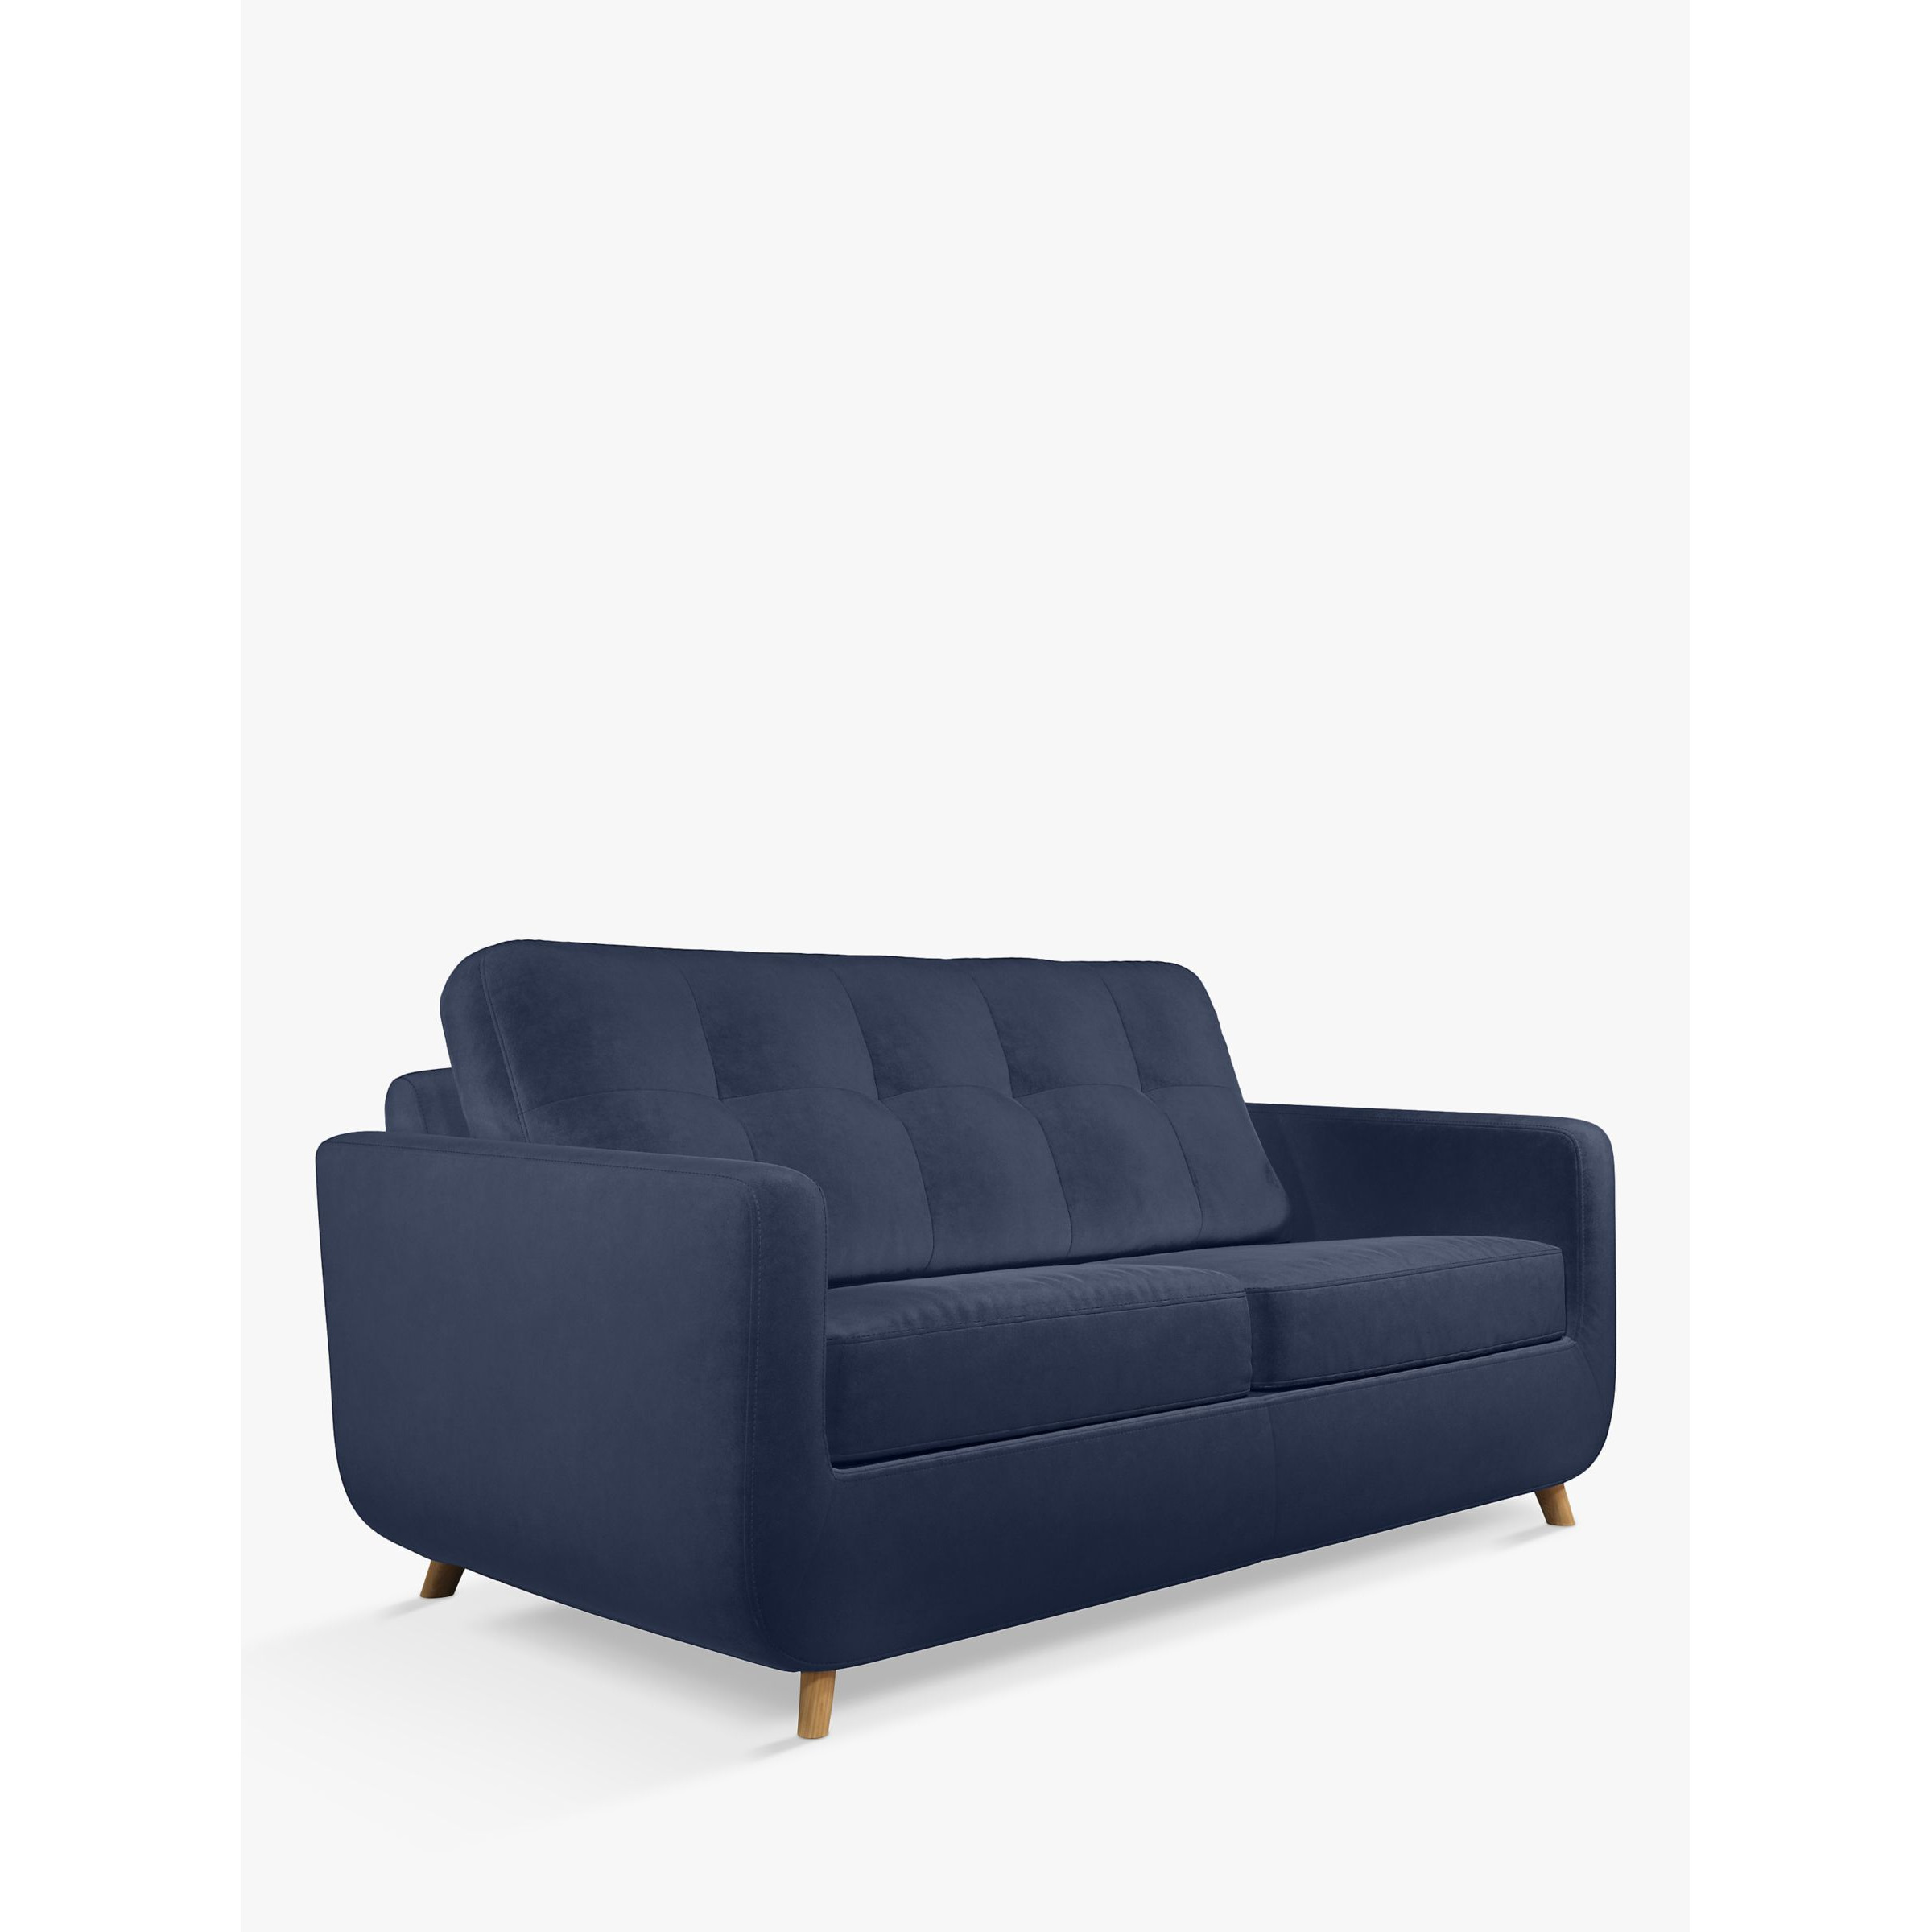 John Lewis Barbican Medium 2 Seater Sofa Bed, Dark Leg, Smooth Velvet Navy - image 1